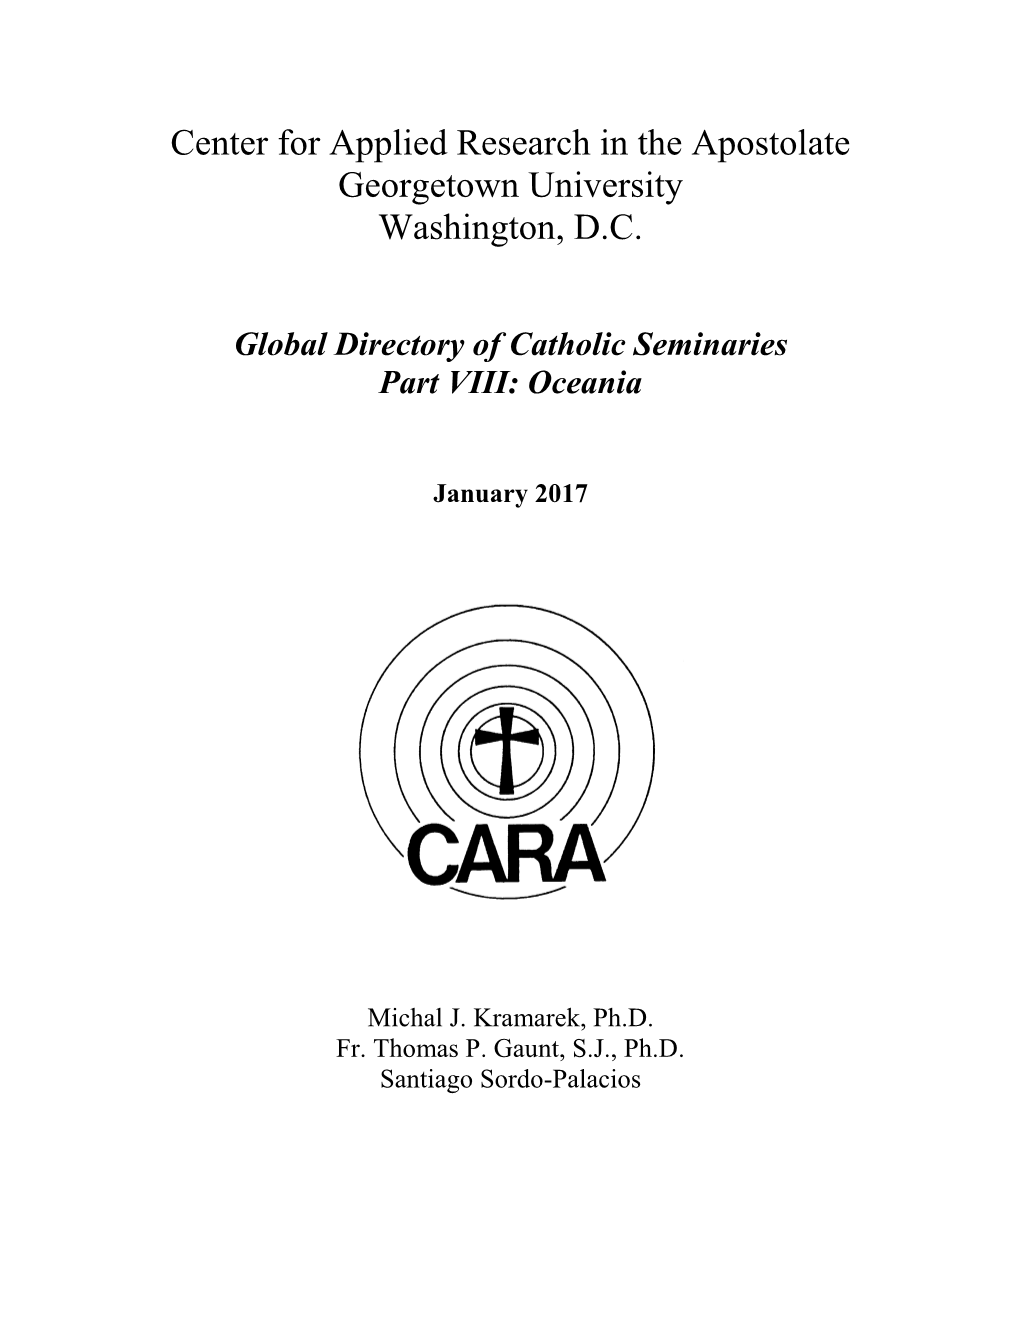 Global Directory of Catholic Seminaries Part VIII: Oceania